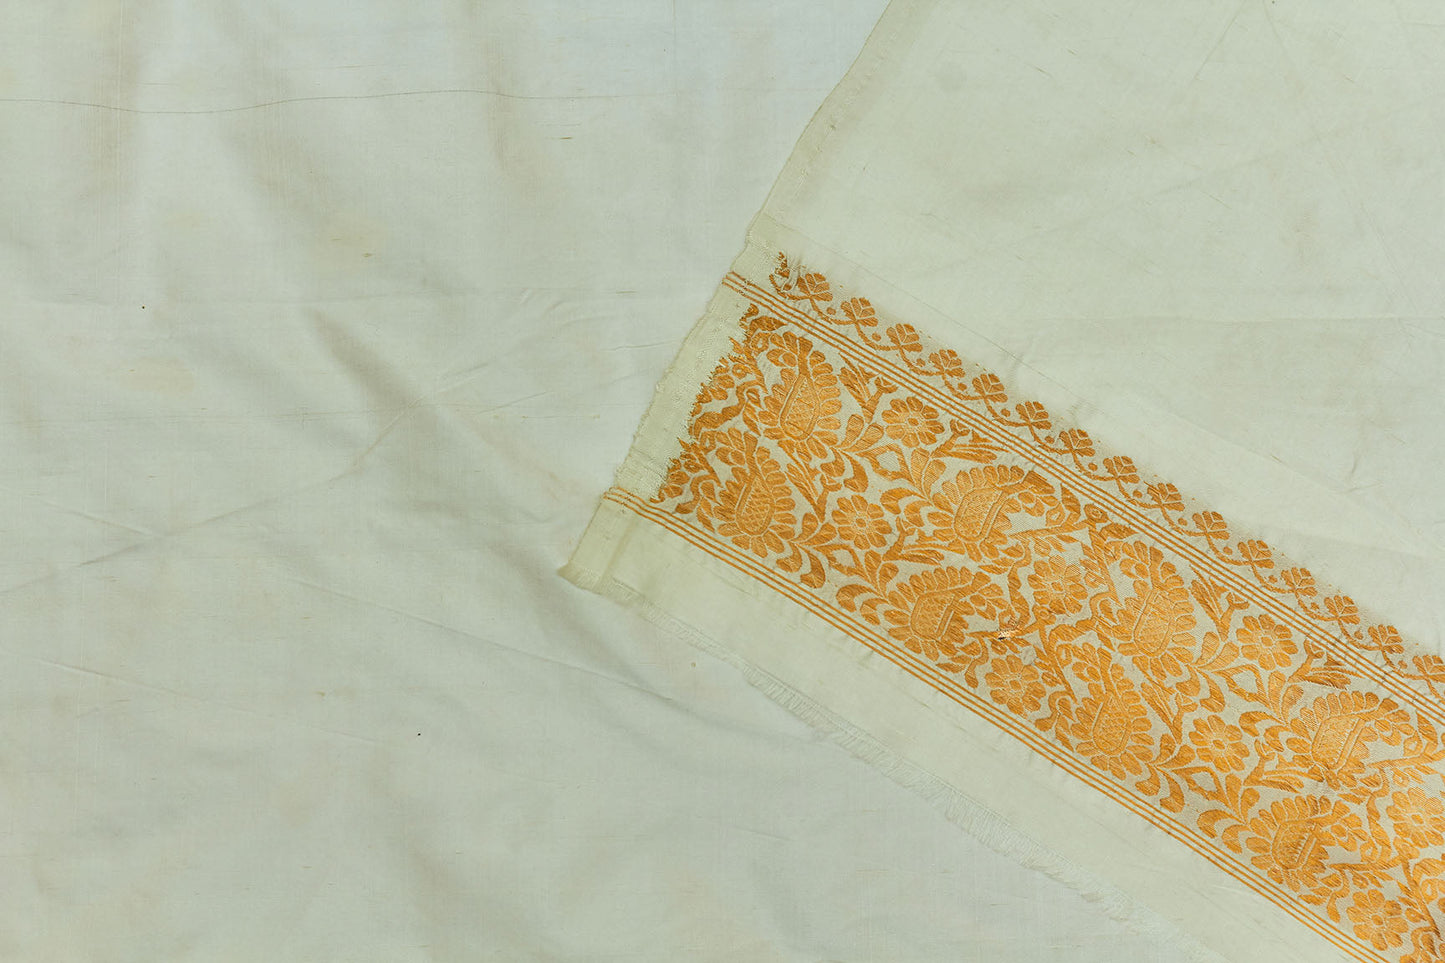 Baby Ivory Assam Pat Handloom Silk Sari (Fabriqué sur commande)